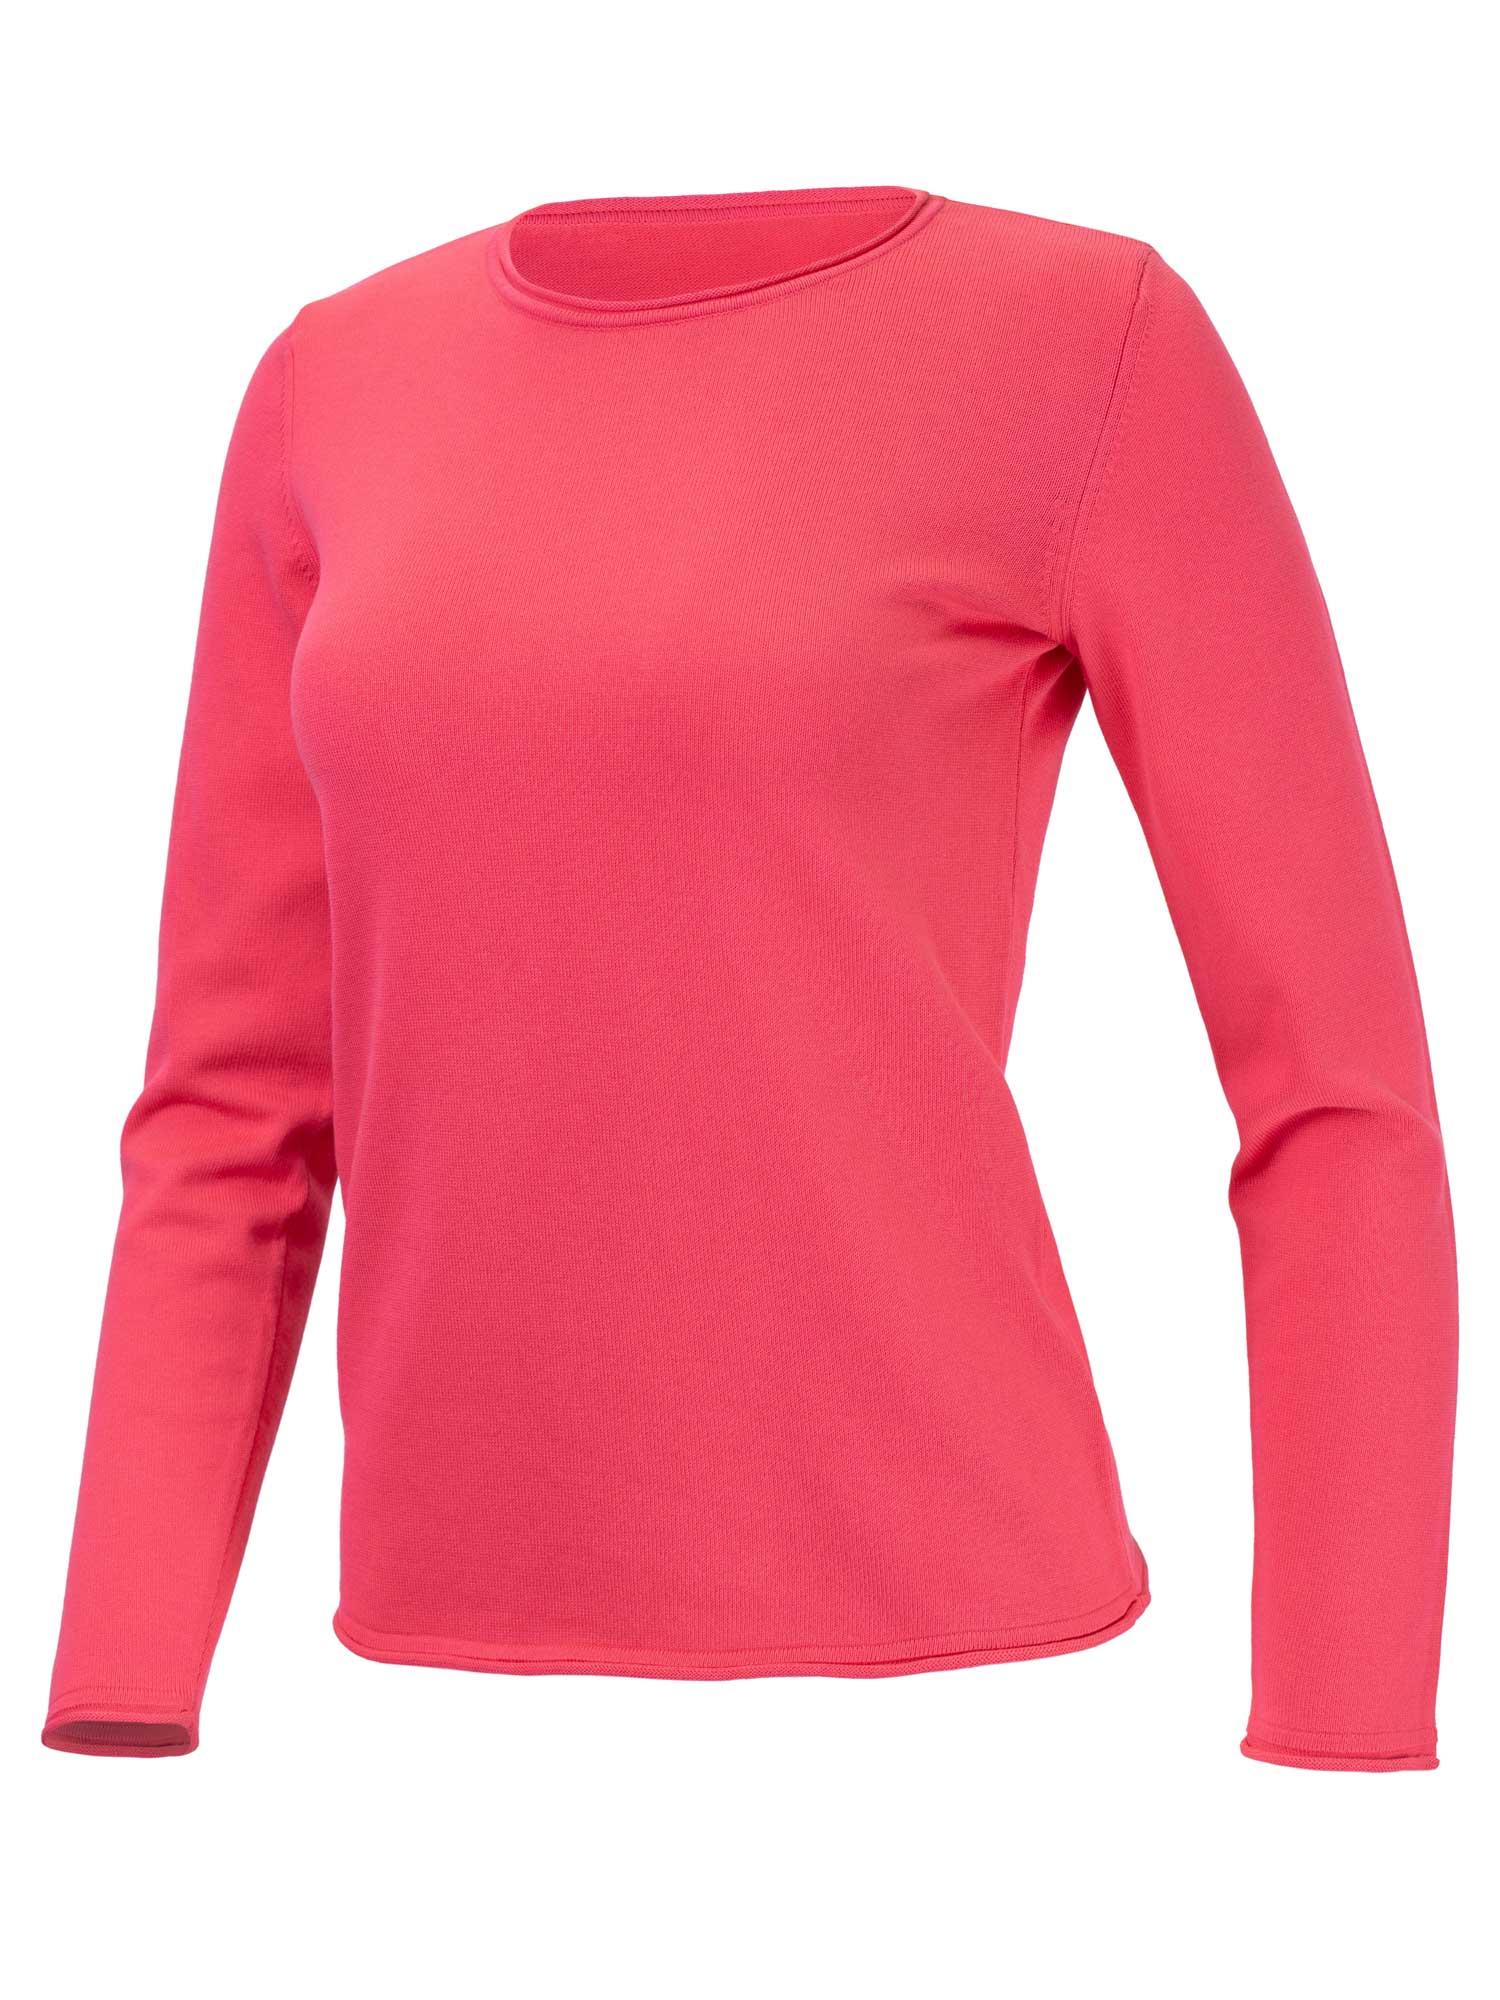 Selected image for BRILLE Ženski džemper Sweater roze